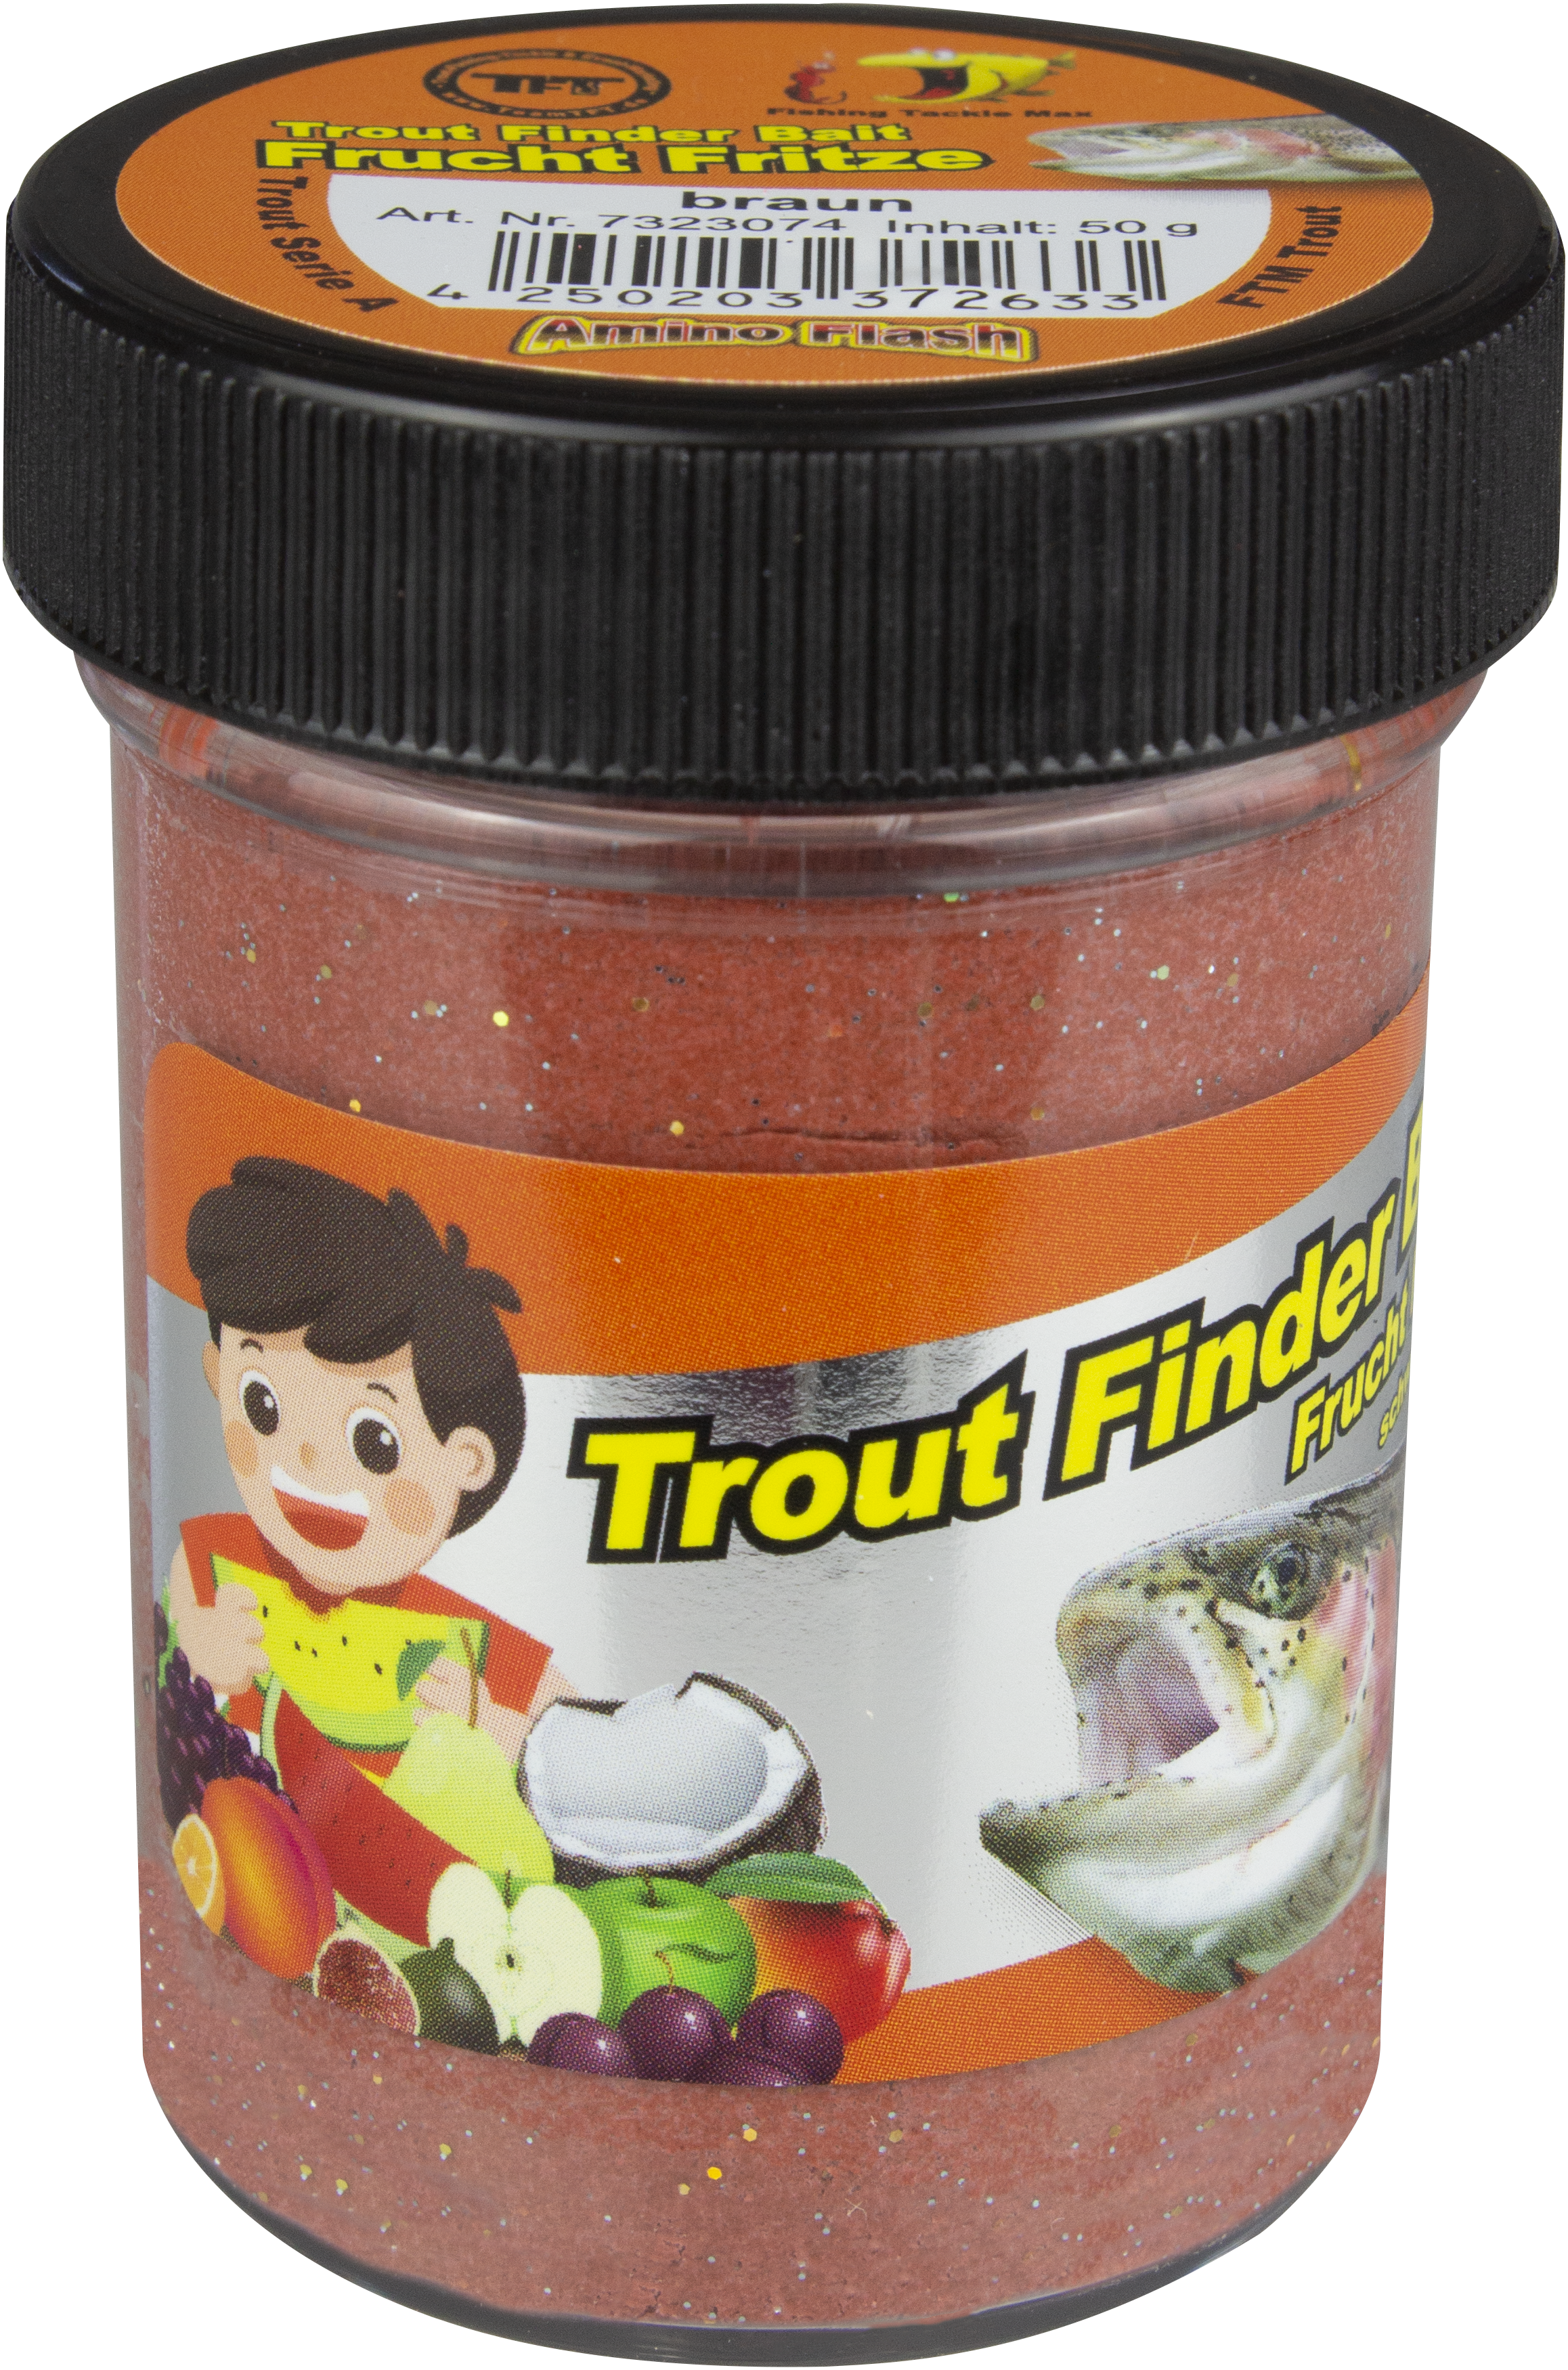 FTM Trout Finder Bait Forellenteig Frucht Fritze